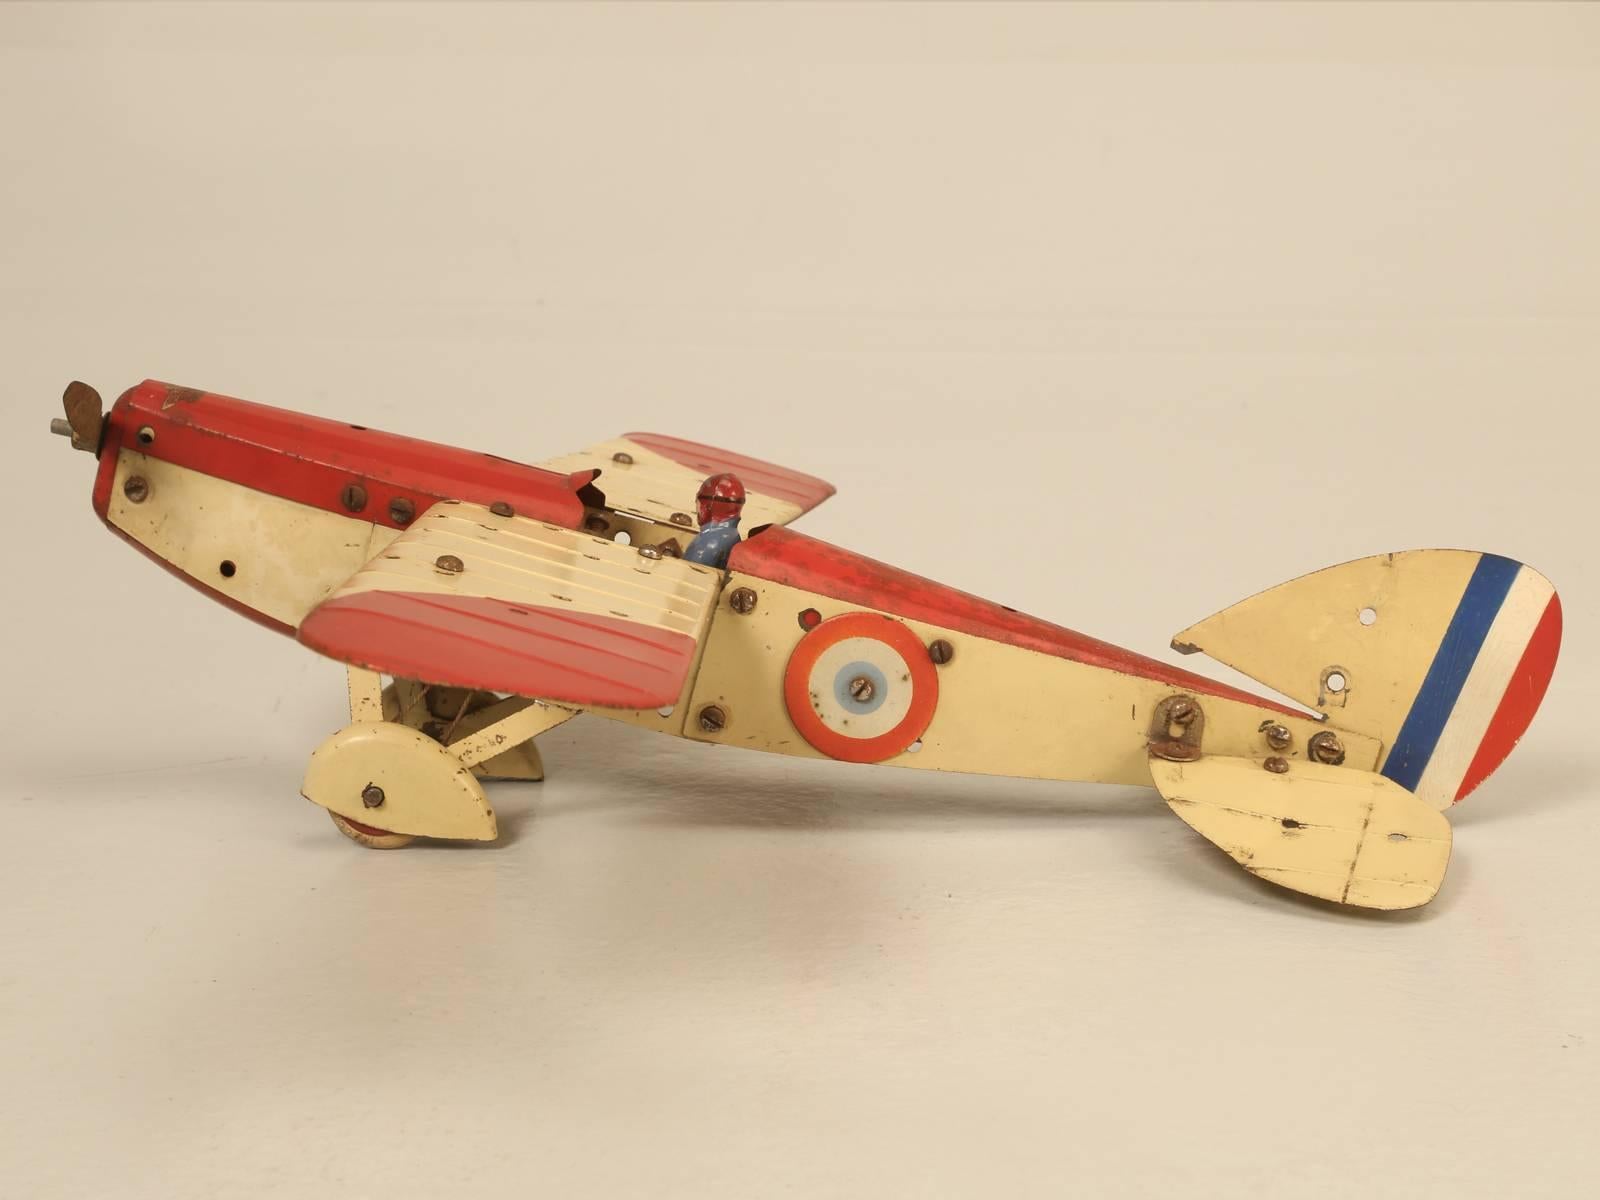 Industrial Meccano Airplane Kit No1 in the Original Box